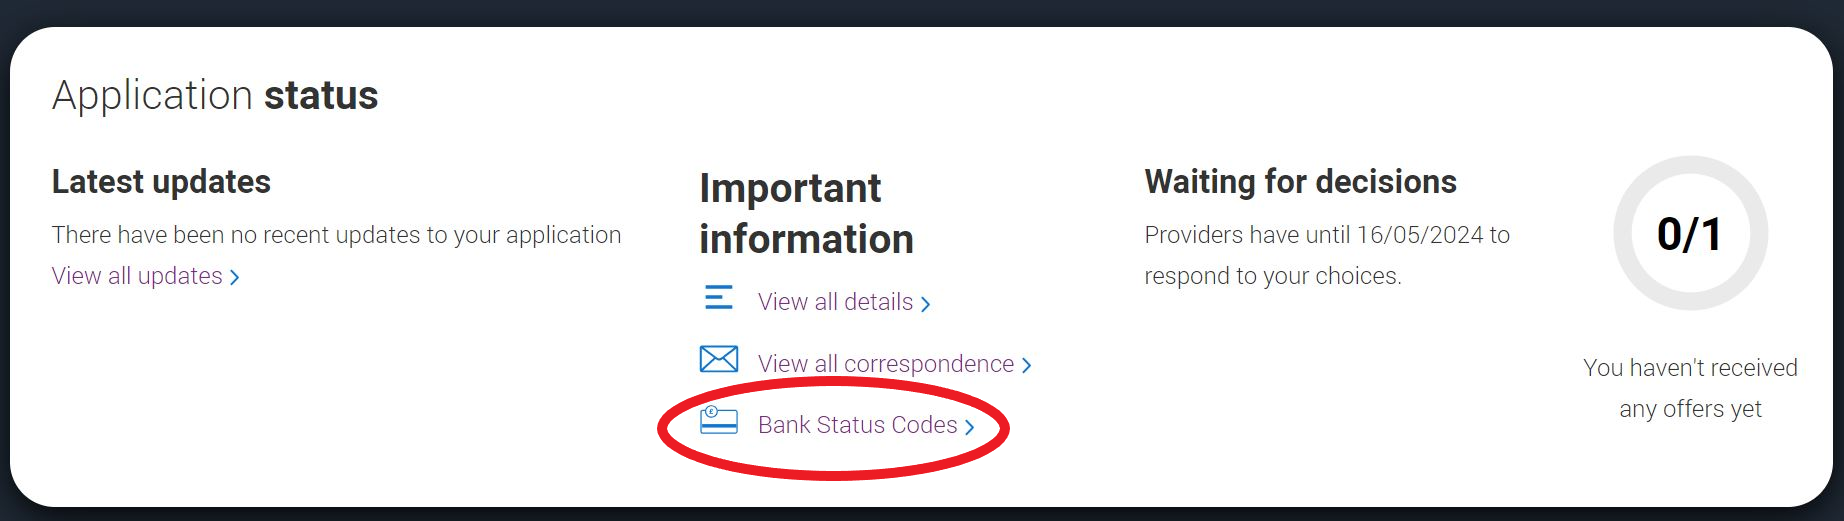 UCAS application screenshot highlighting bank status codes link